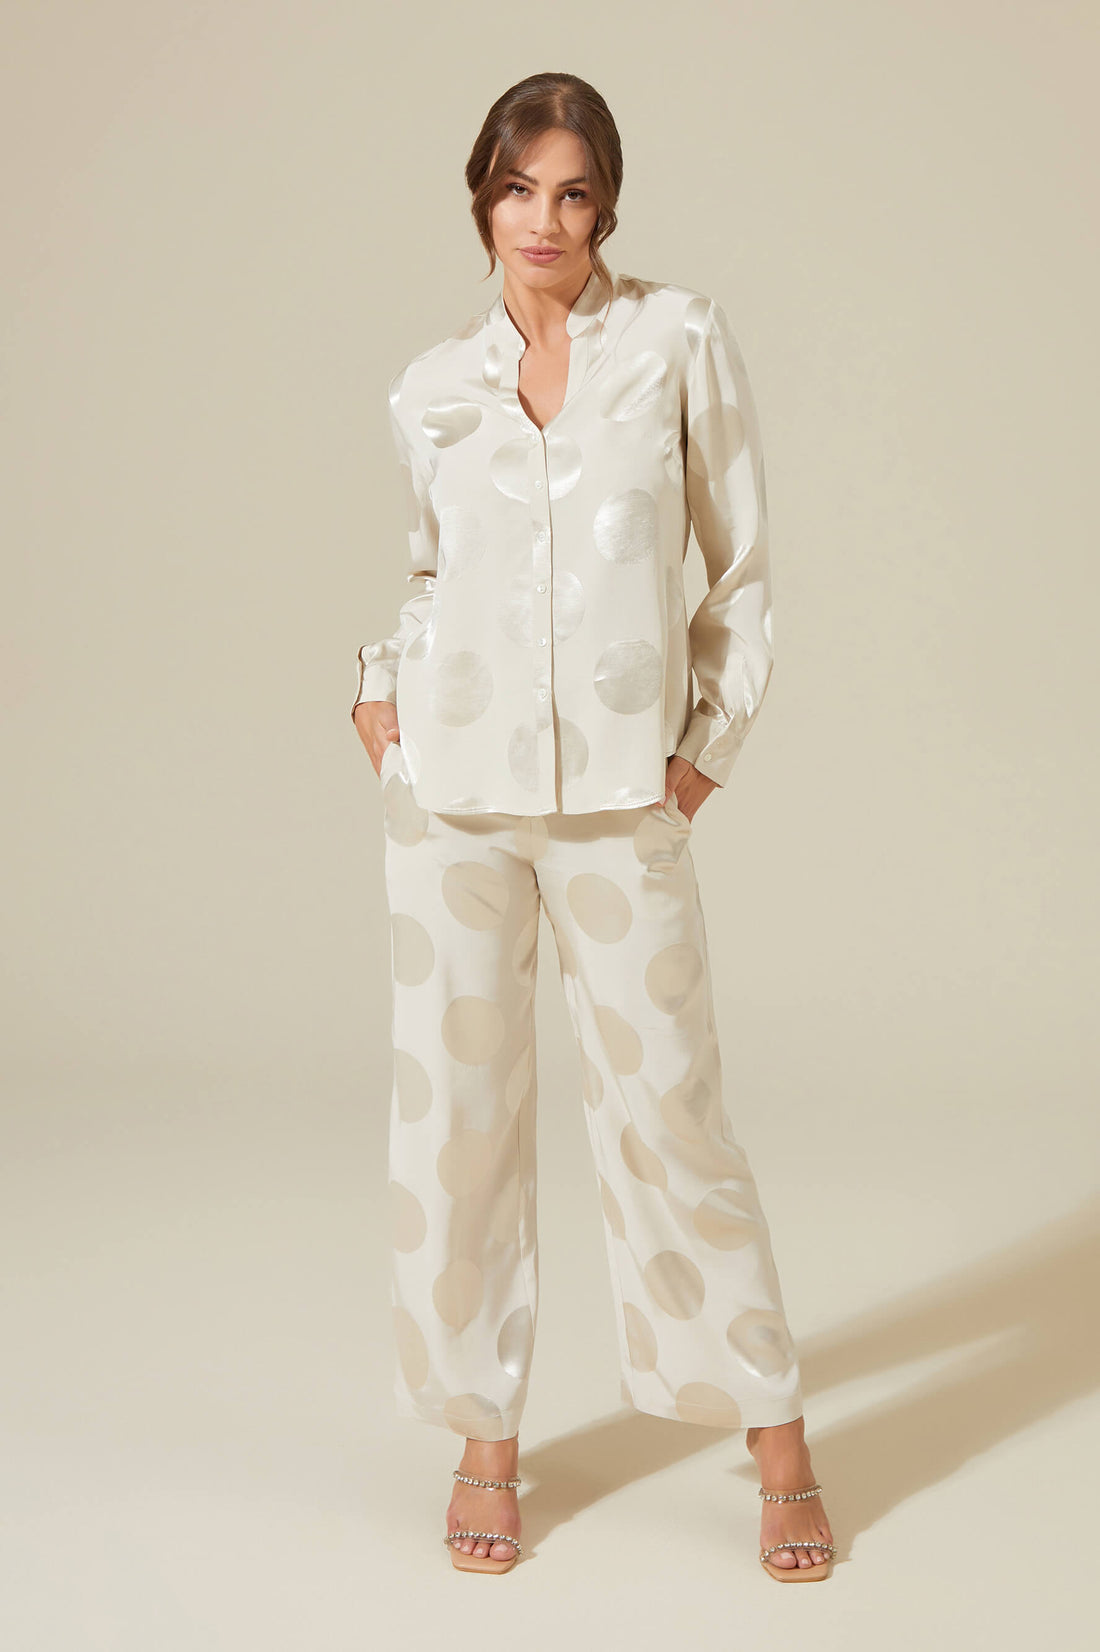 Women's Luxury Pyjamas & Nightwear Sets - Bocan Couture